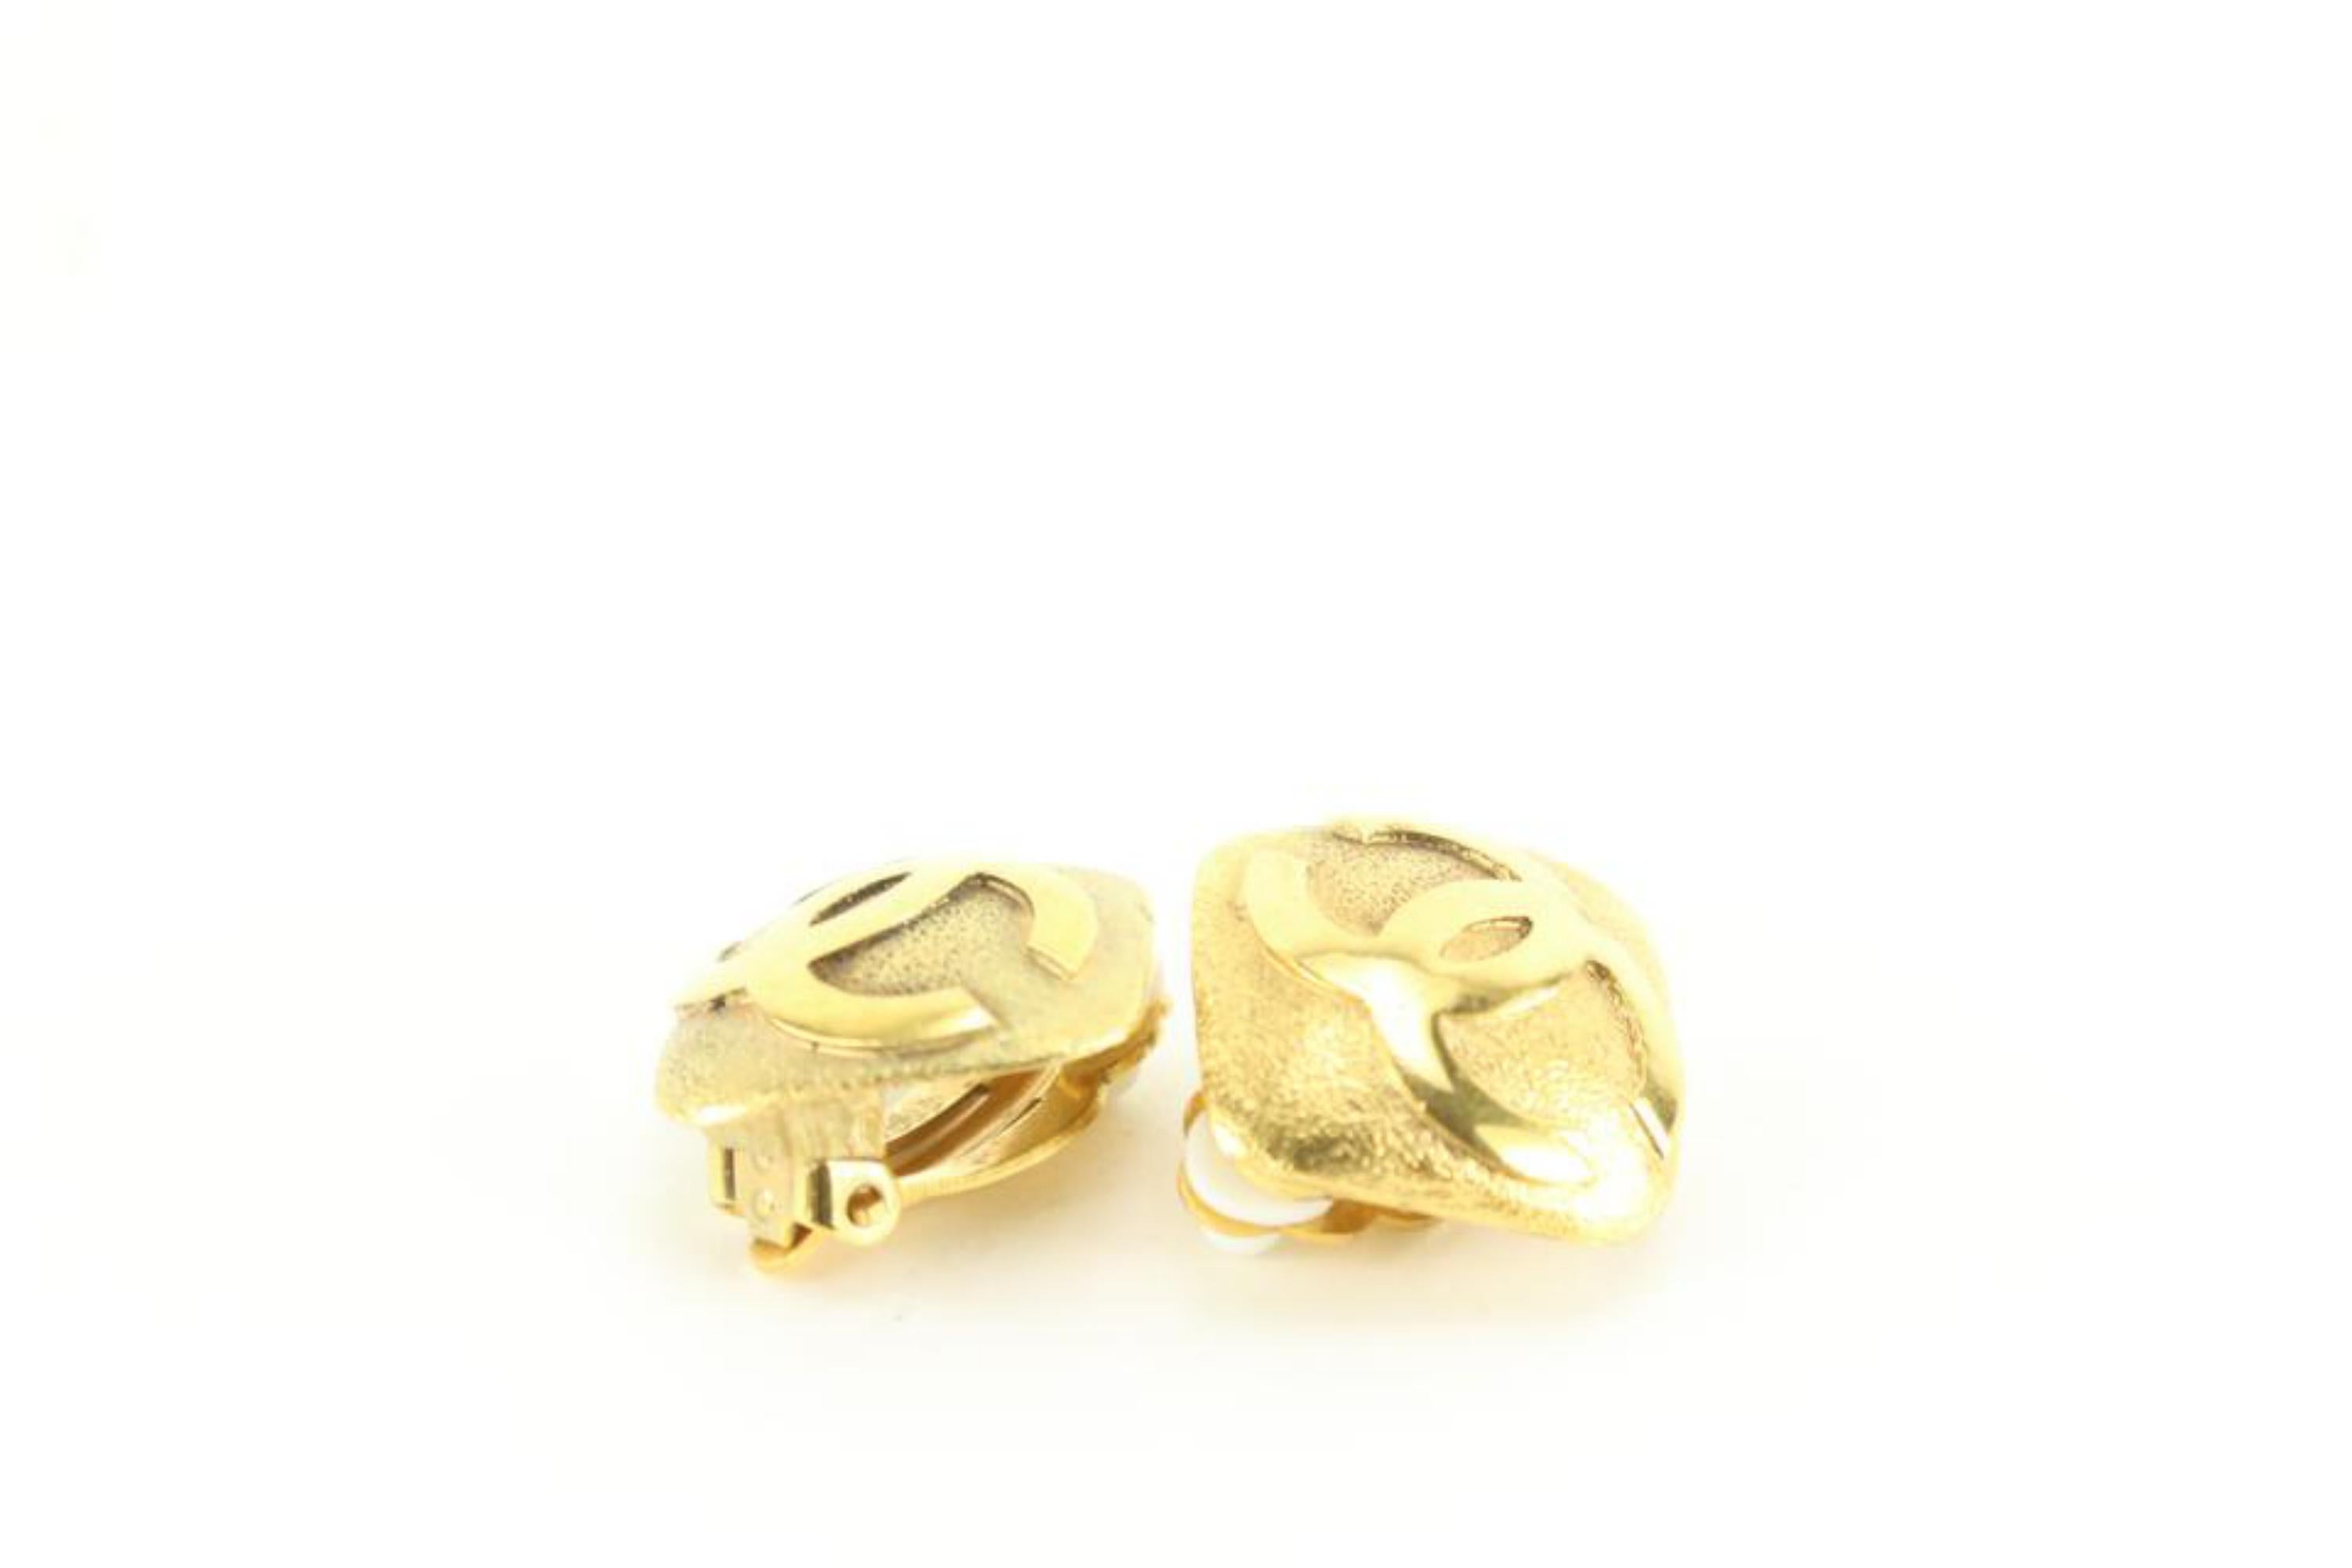 Chanel 29 Series Gold Plated CC Logo Square Diamond Shape Earrings 2cz616s 5